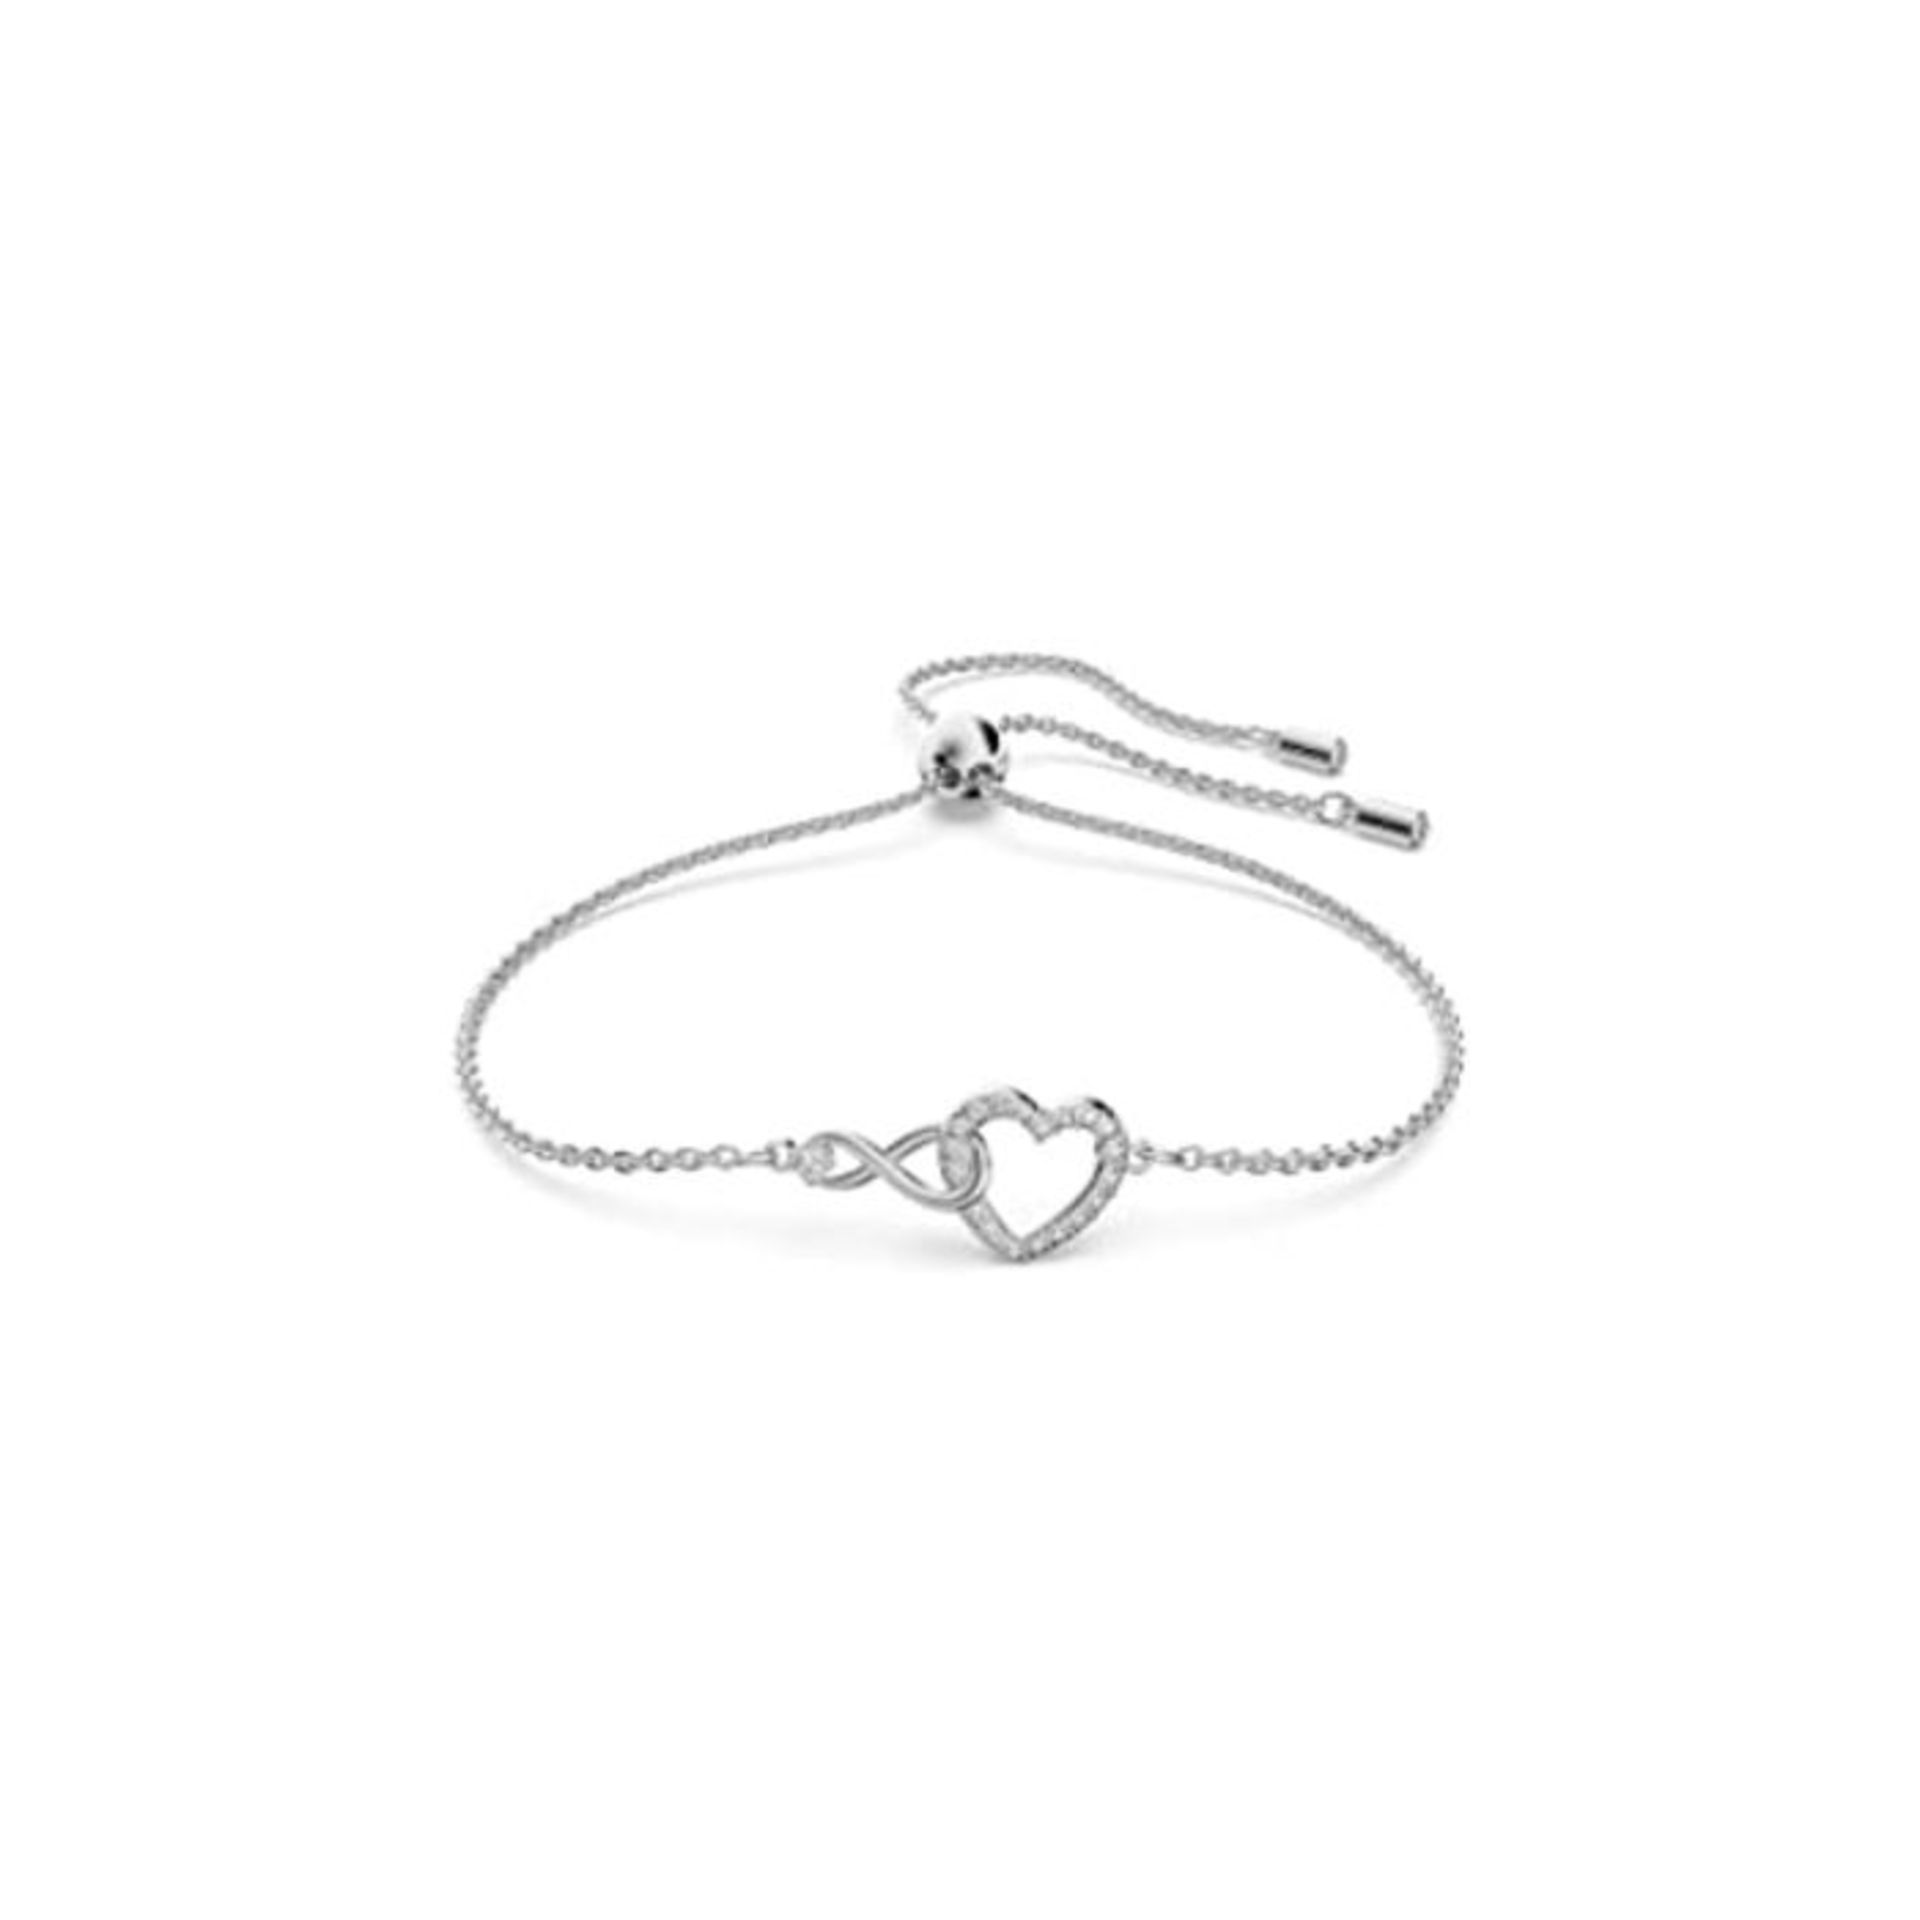 [INCOMPLETE] Swarovski Women's Infinity Heart Bracelet Brilliant White Crystals in a H